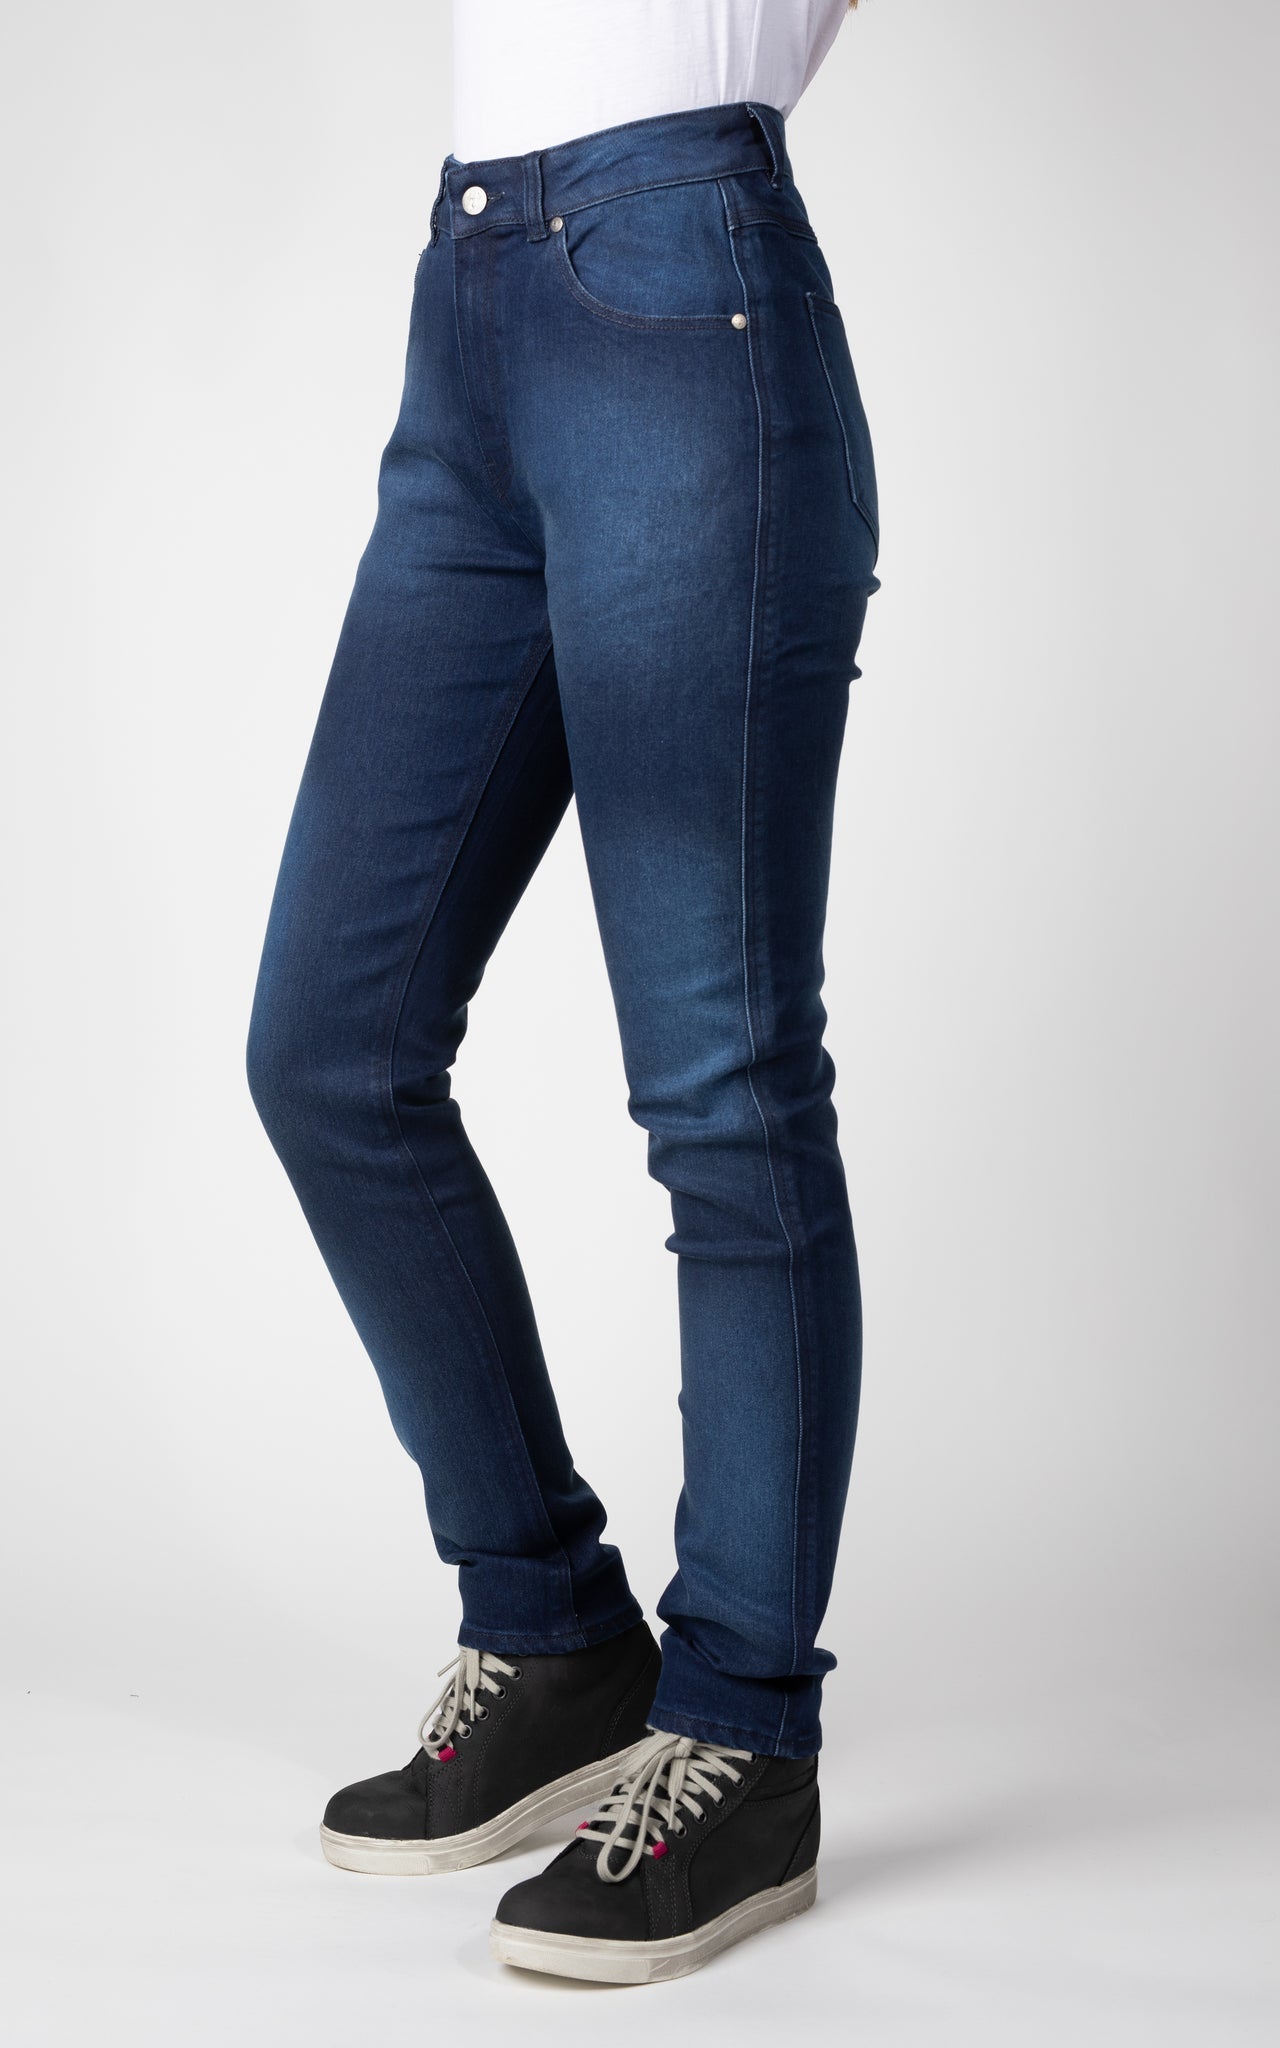 Woman&#39;s legs wearing blue lady motorcycle jeans from Bull-it